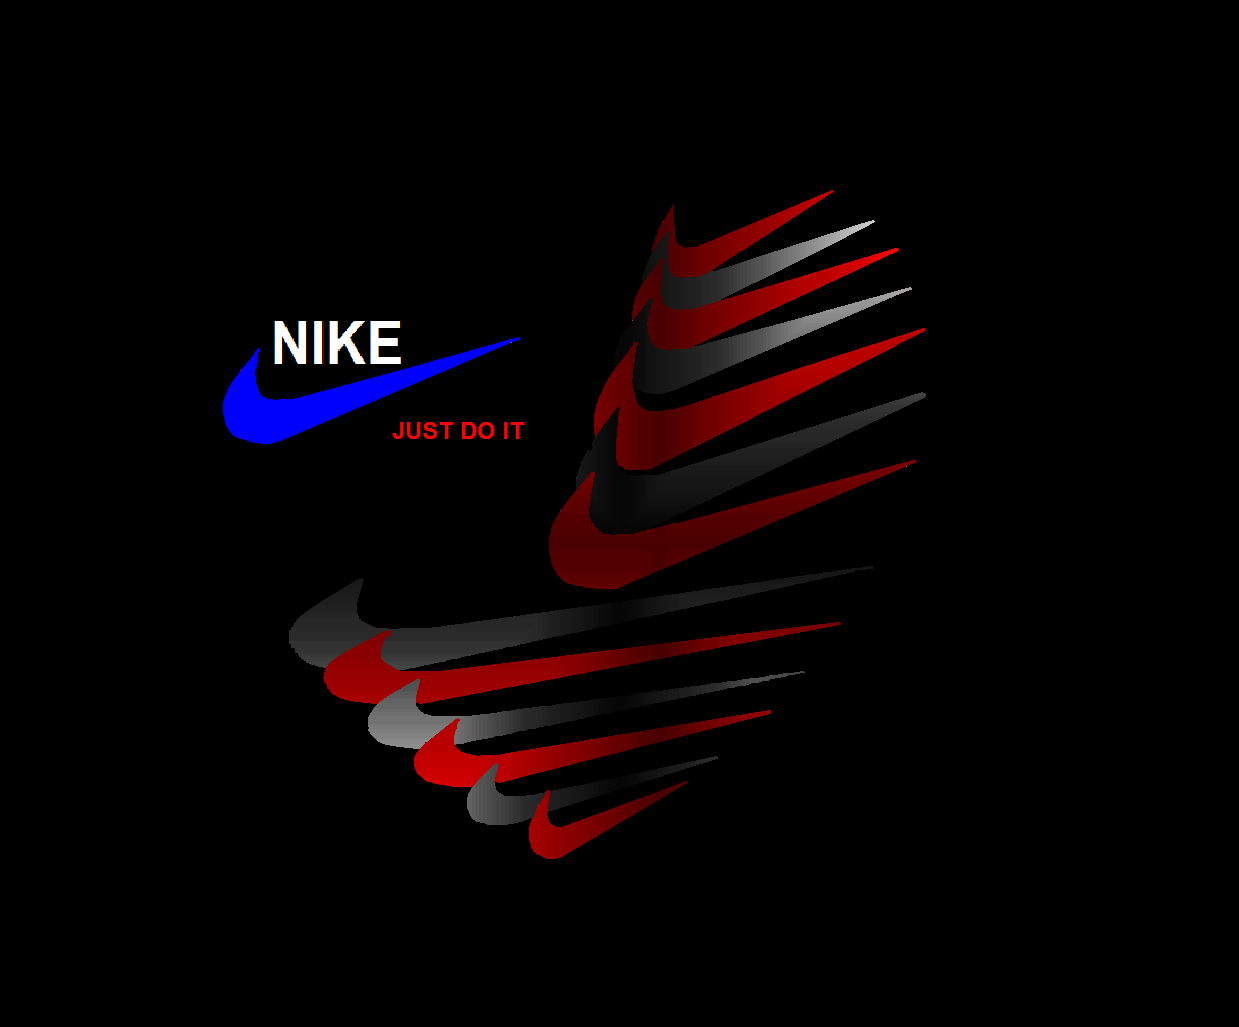 Nike. Nike wallpaper, Adidas logo wallpaper, Nike retro